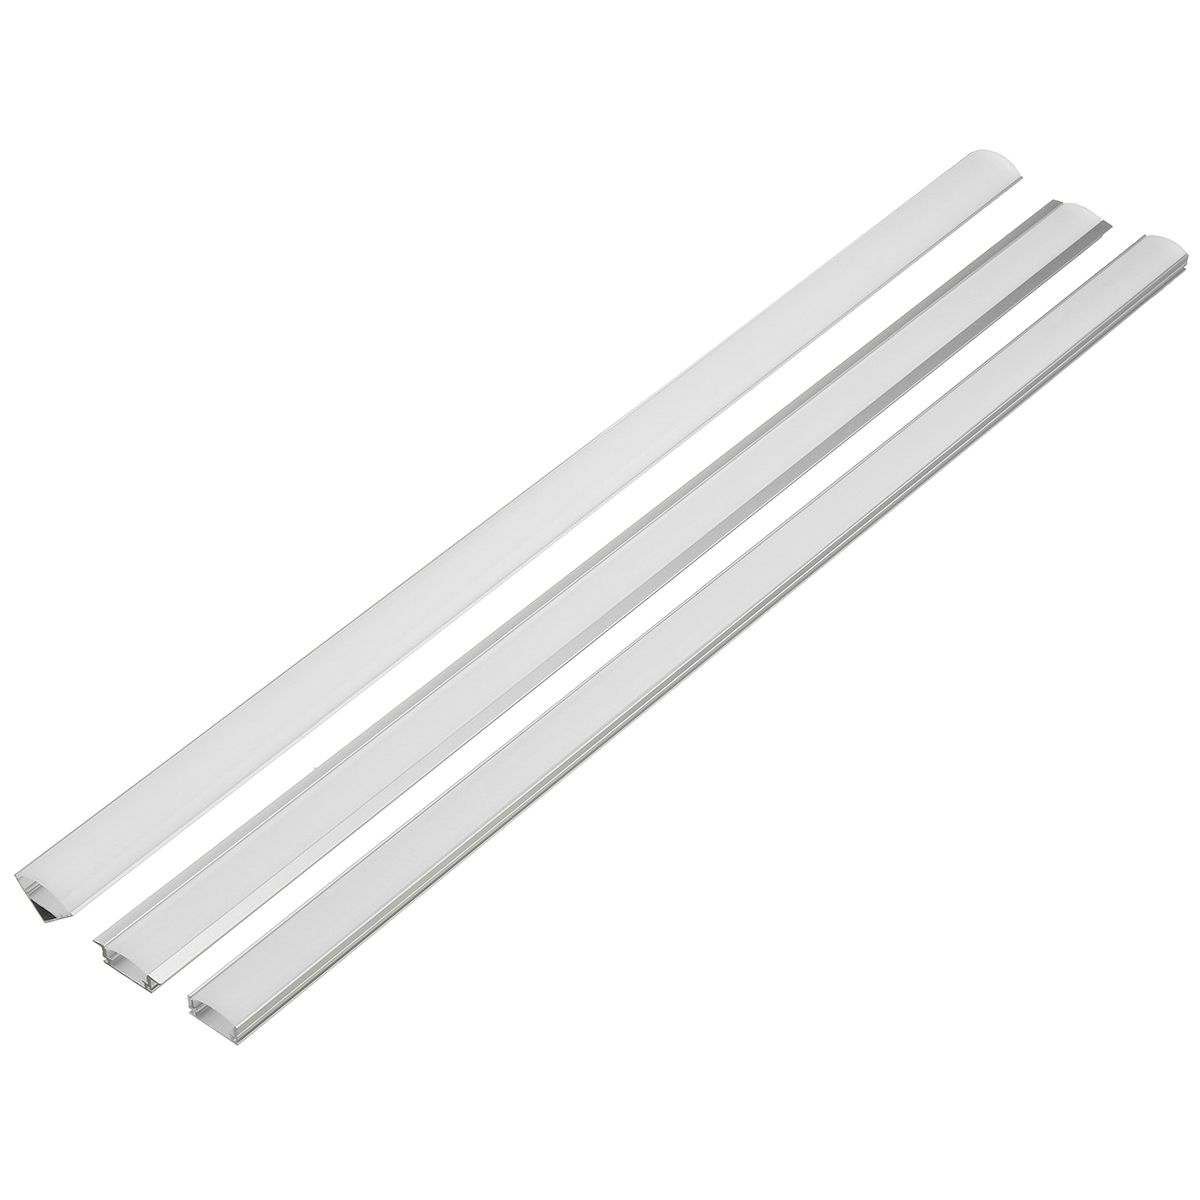 45cm-UVYW-Style-Aluminium-Channel-Holder-for-LED-Strip-Light-Bar-Cabinet-Lamp-1134504